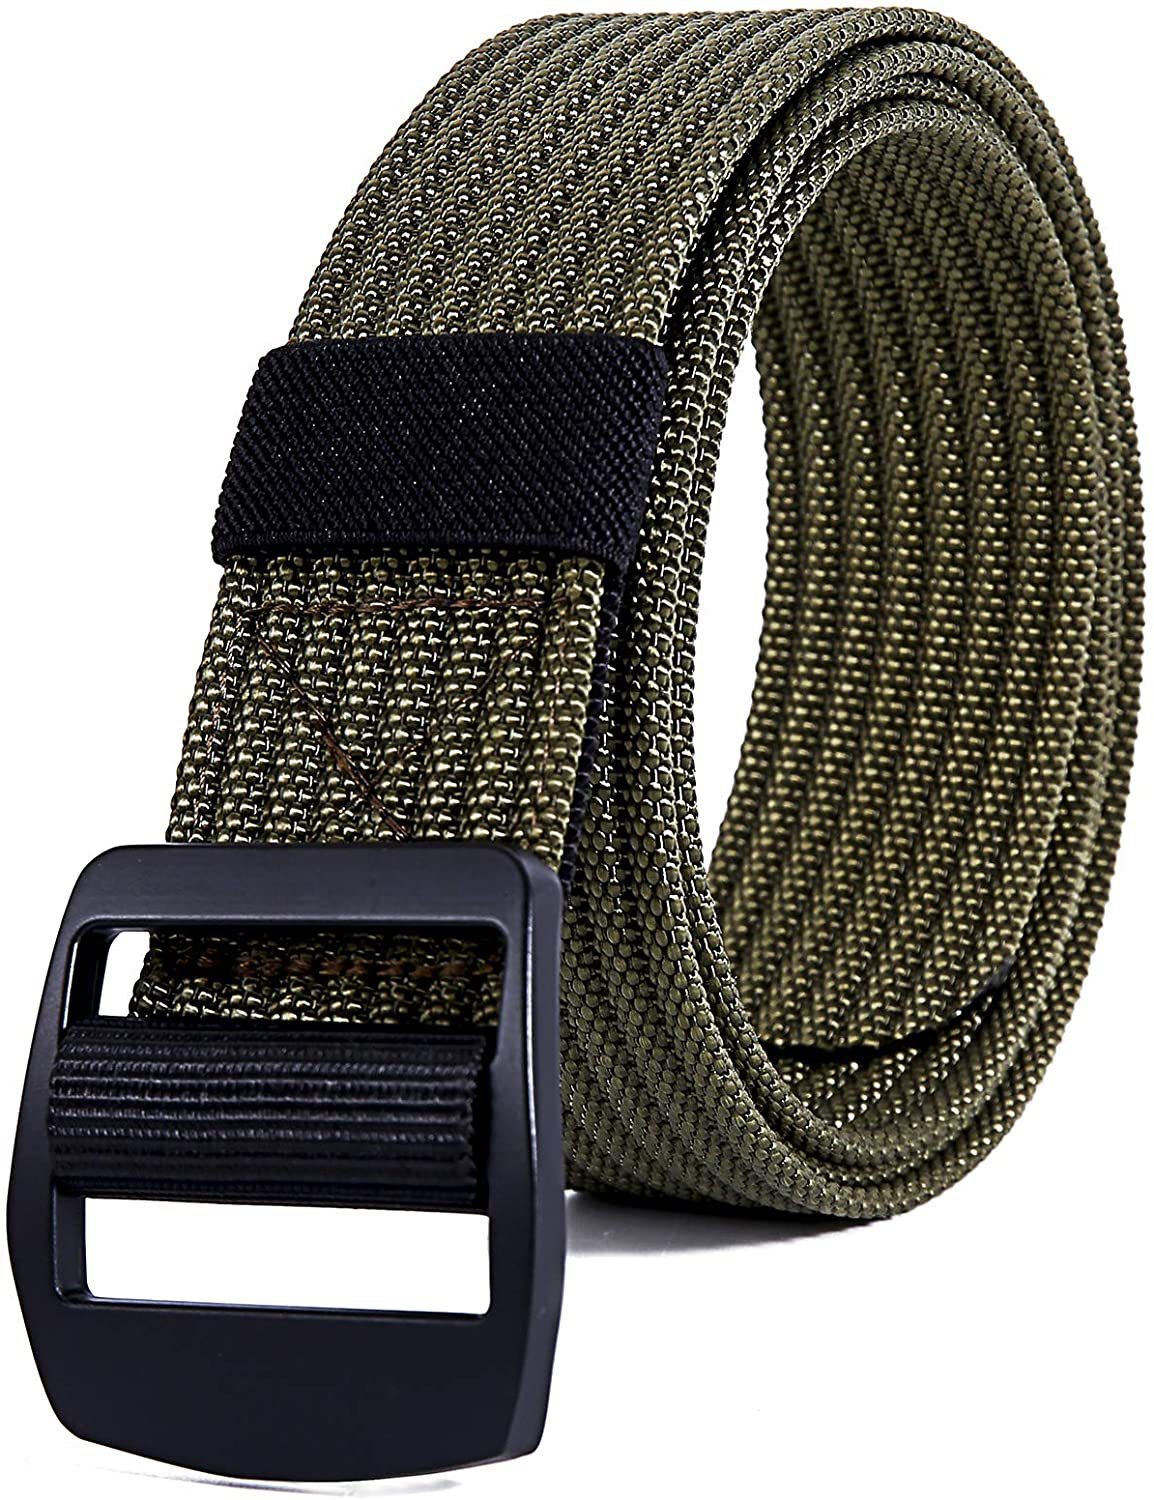 Tactical Belt Buckle Accessories Belt Tactical